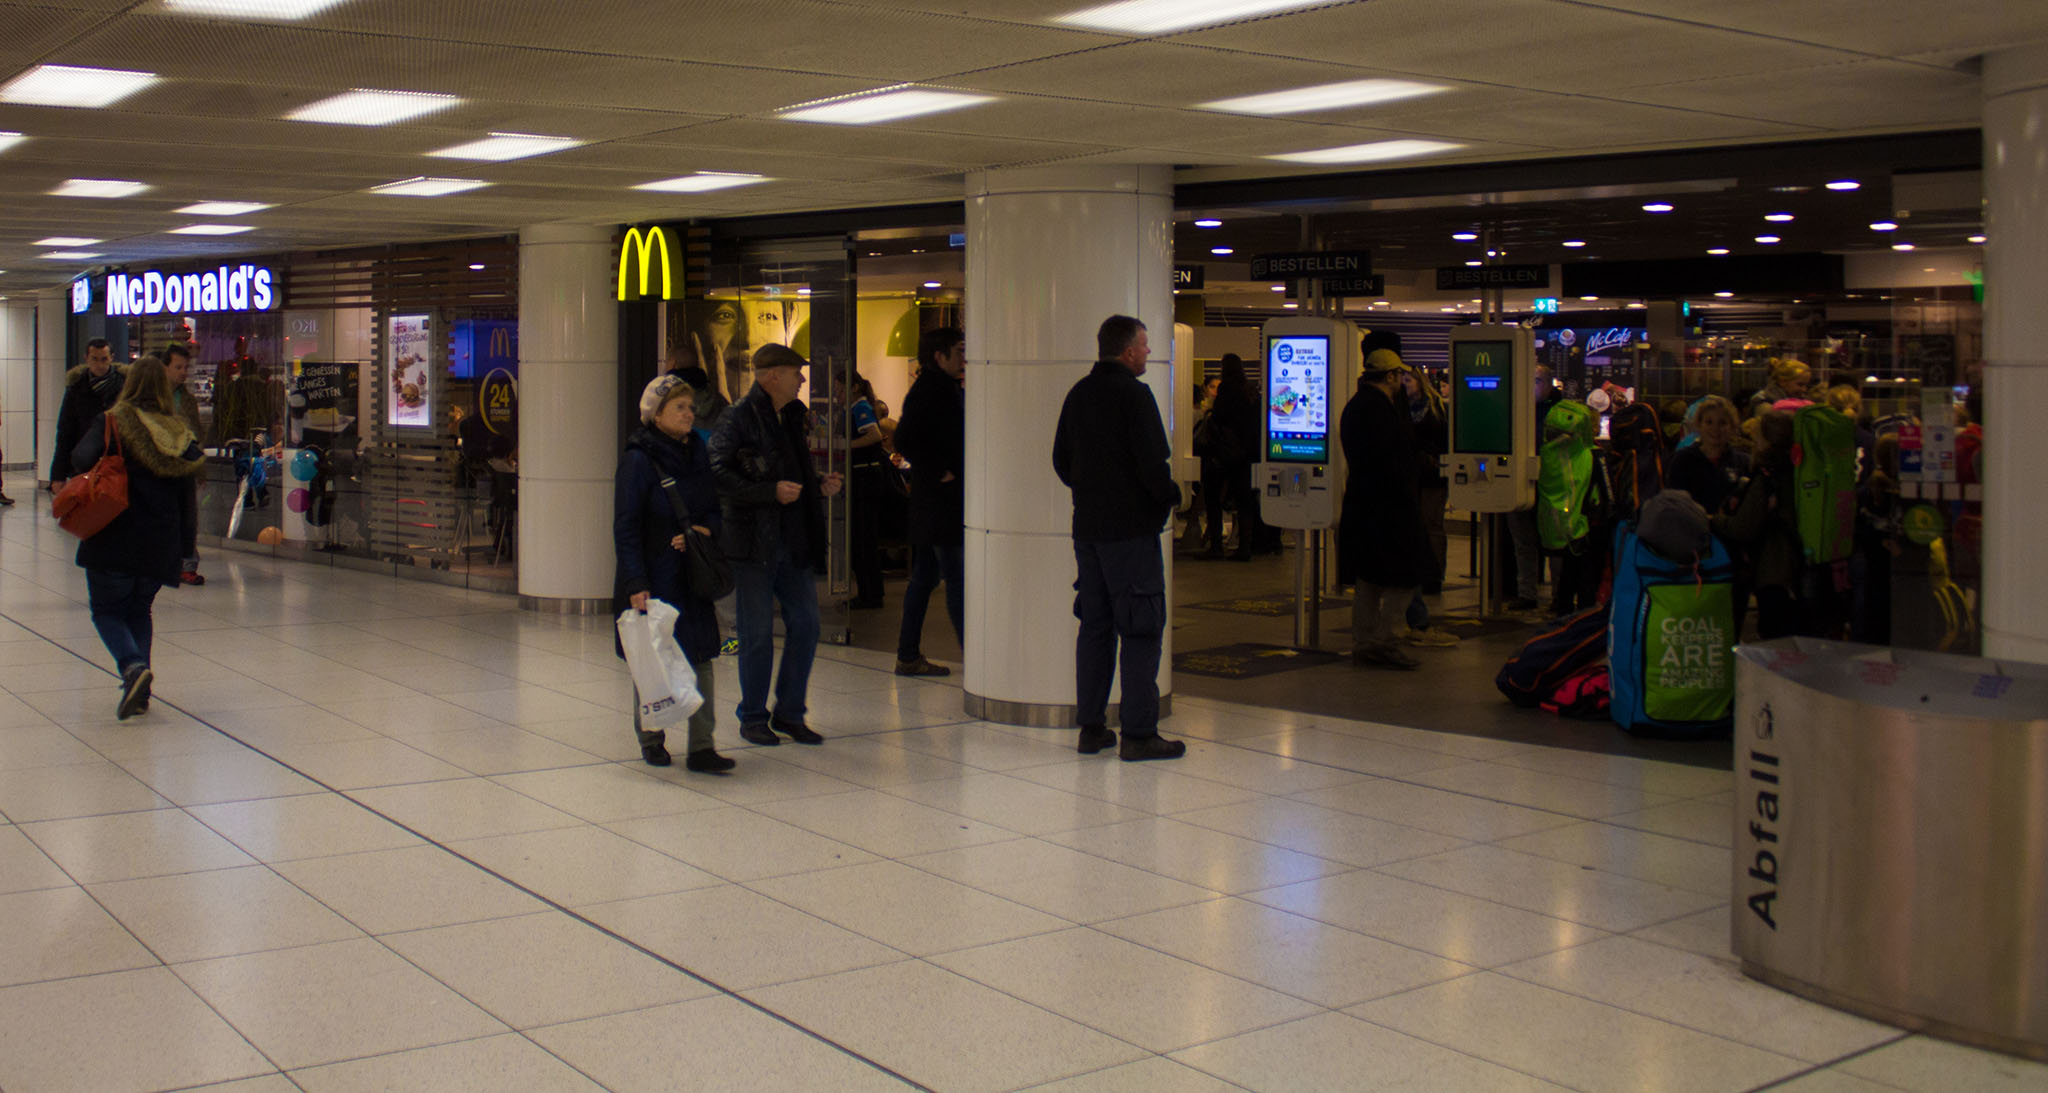 Das McDonald’s-Restaurant in München (Hauptbahnhof)